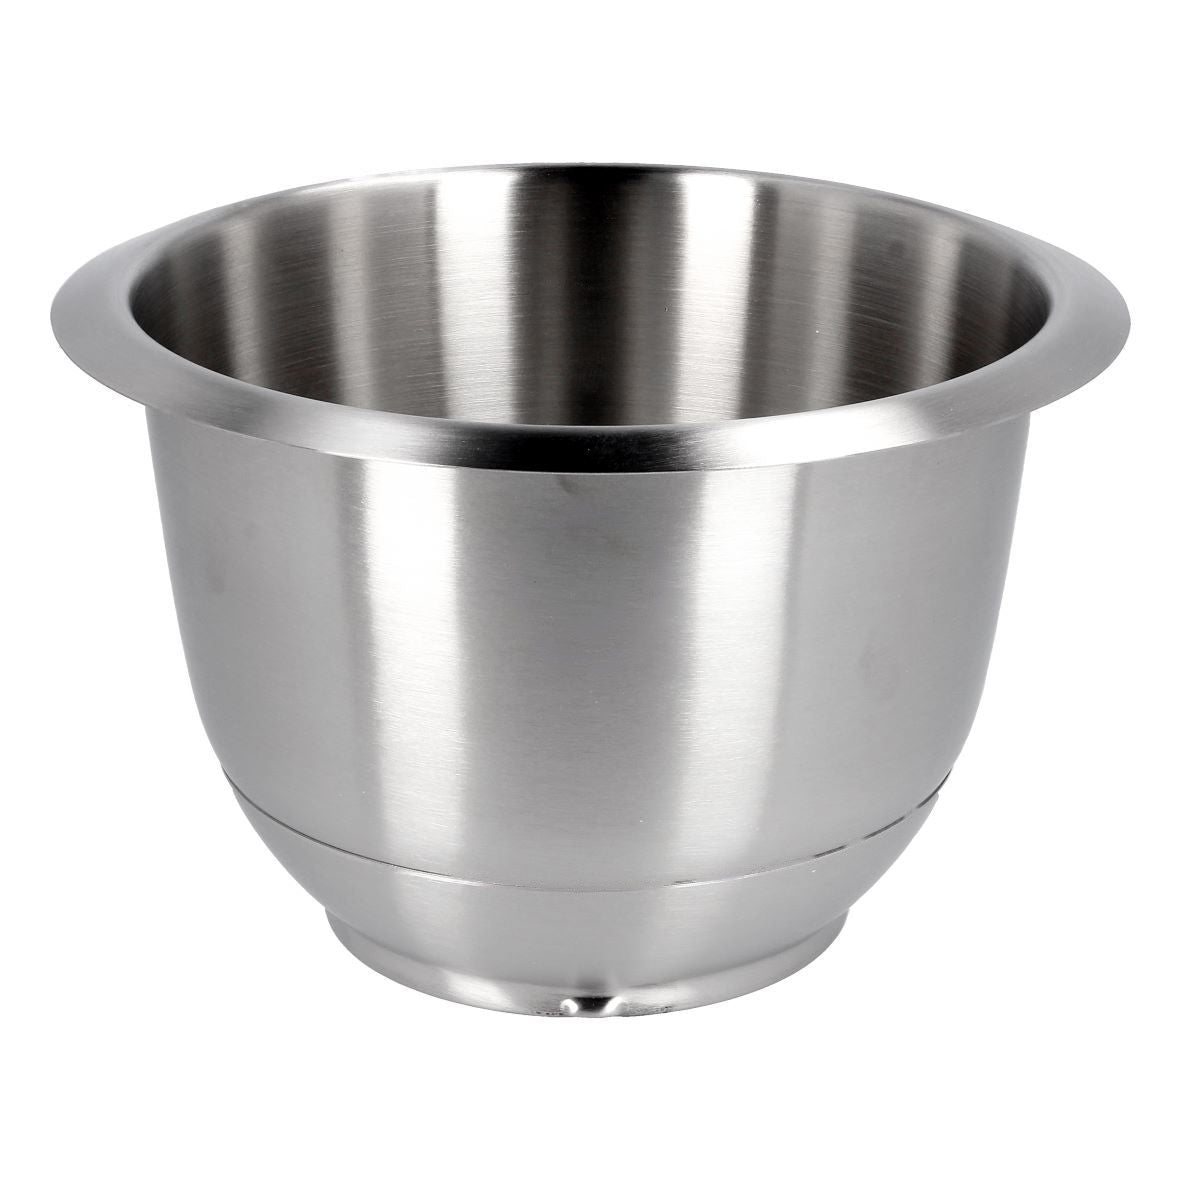 Bosch MUM58L20 Kitchen Stainless Steel Mixing Bowl